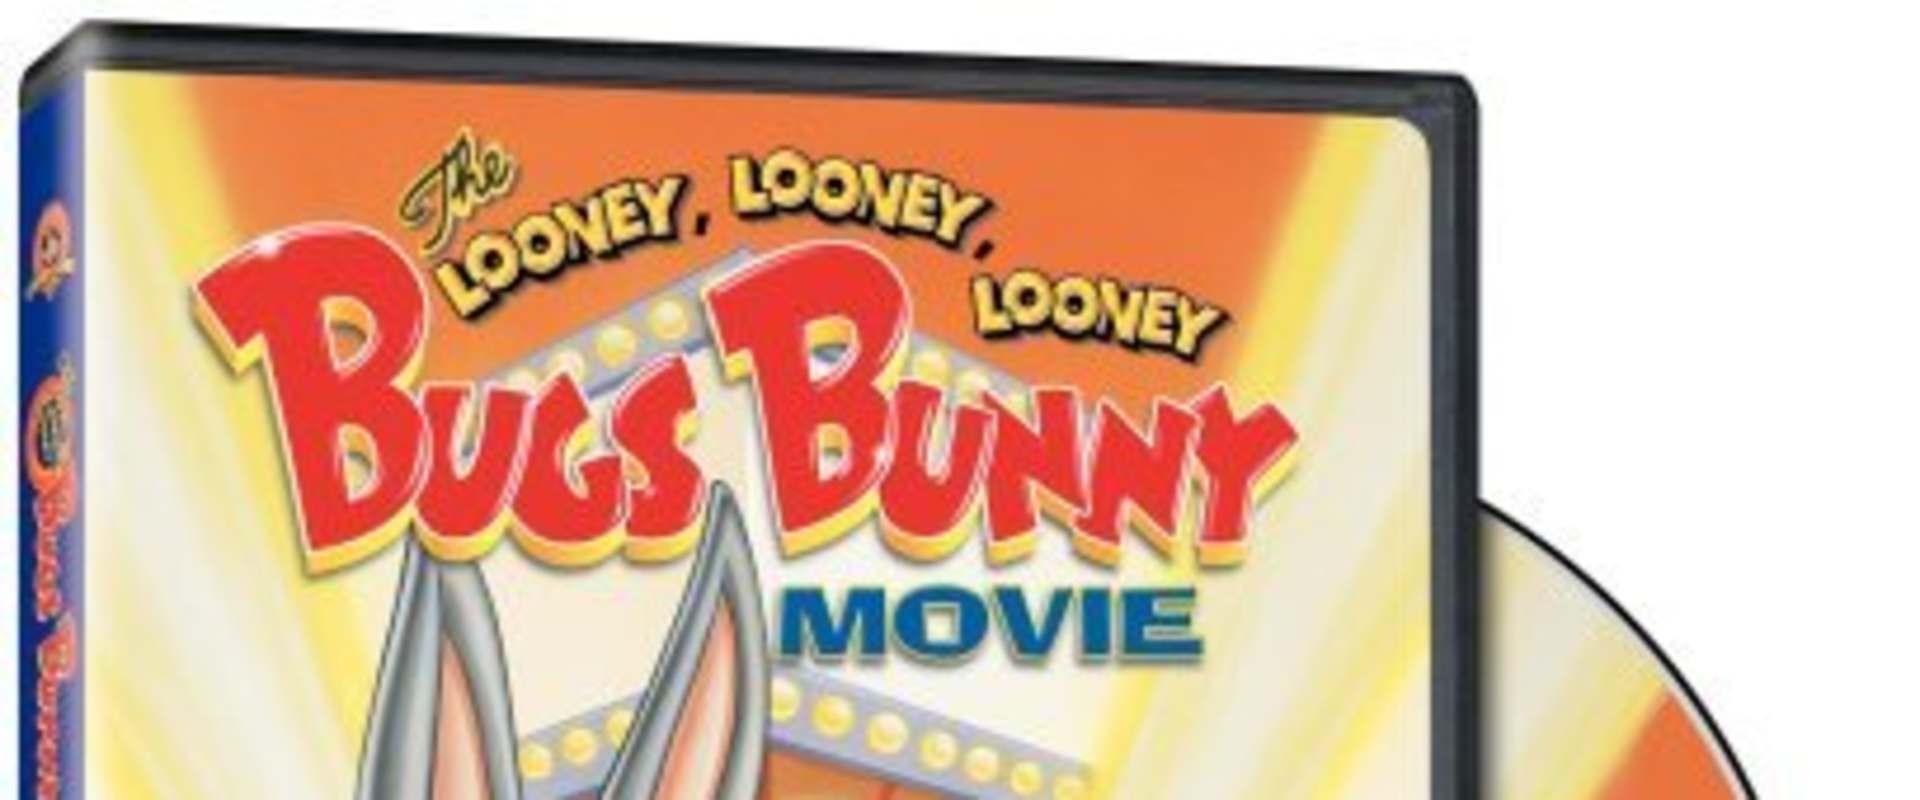 The Looney, Looney, Looney Bugs Bunny Movie background 1